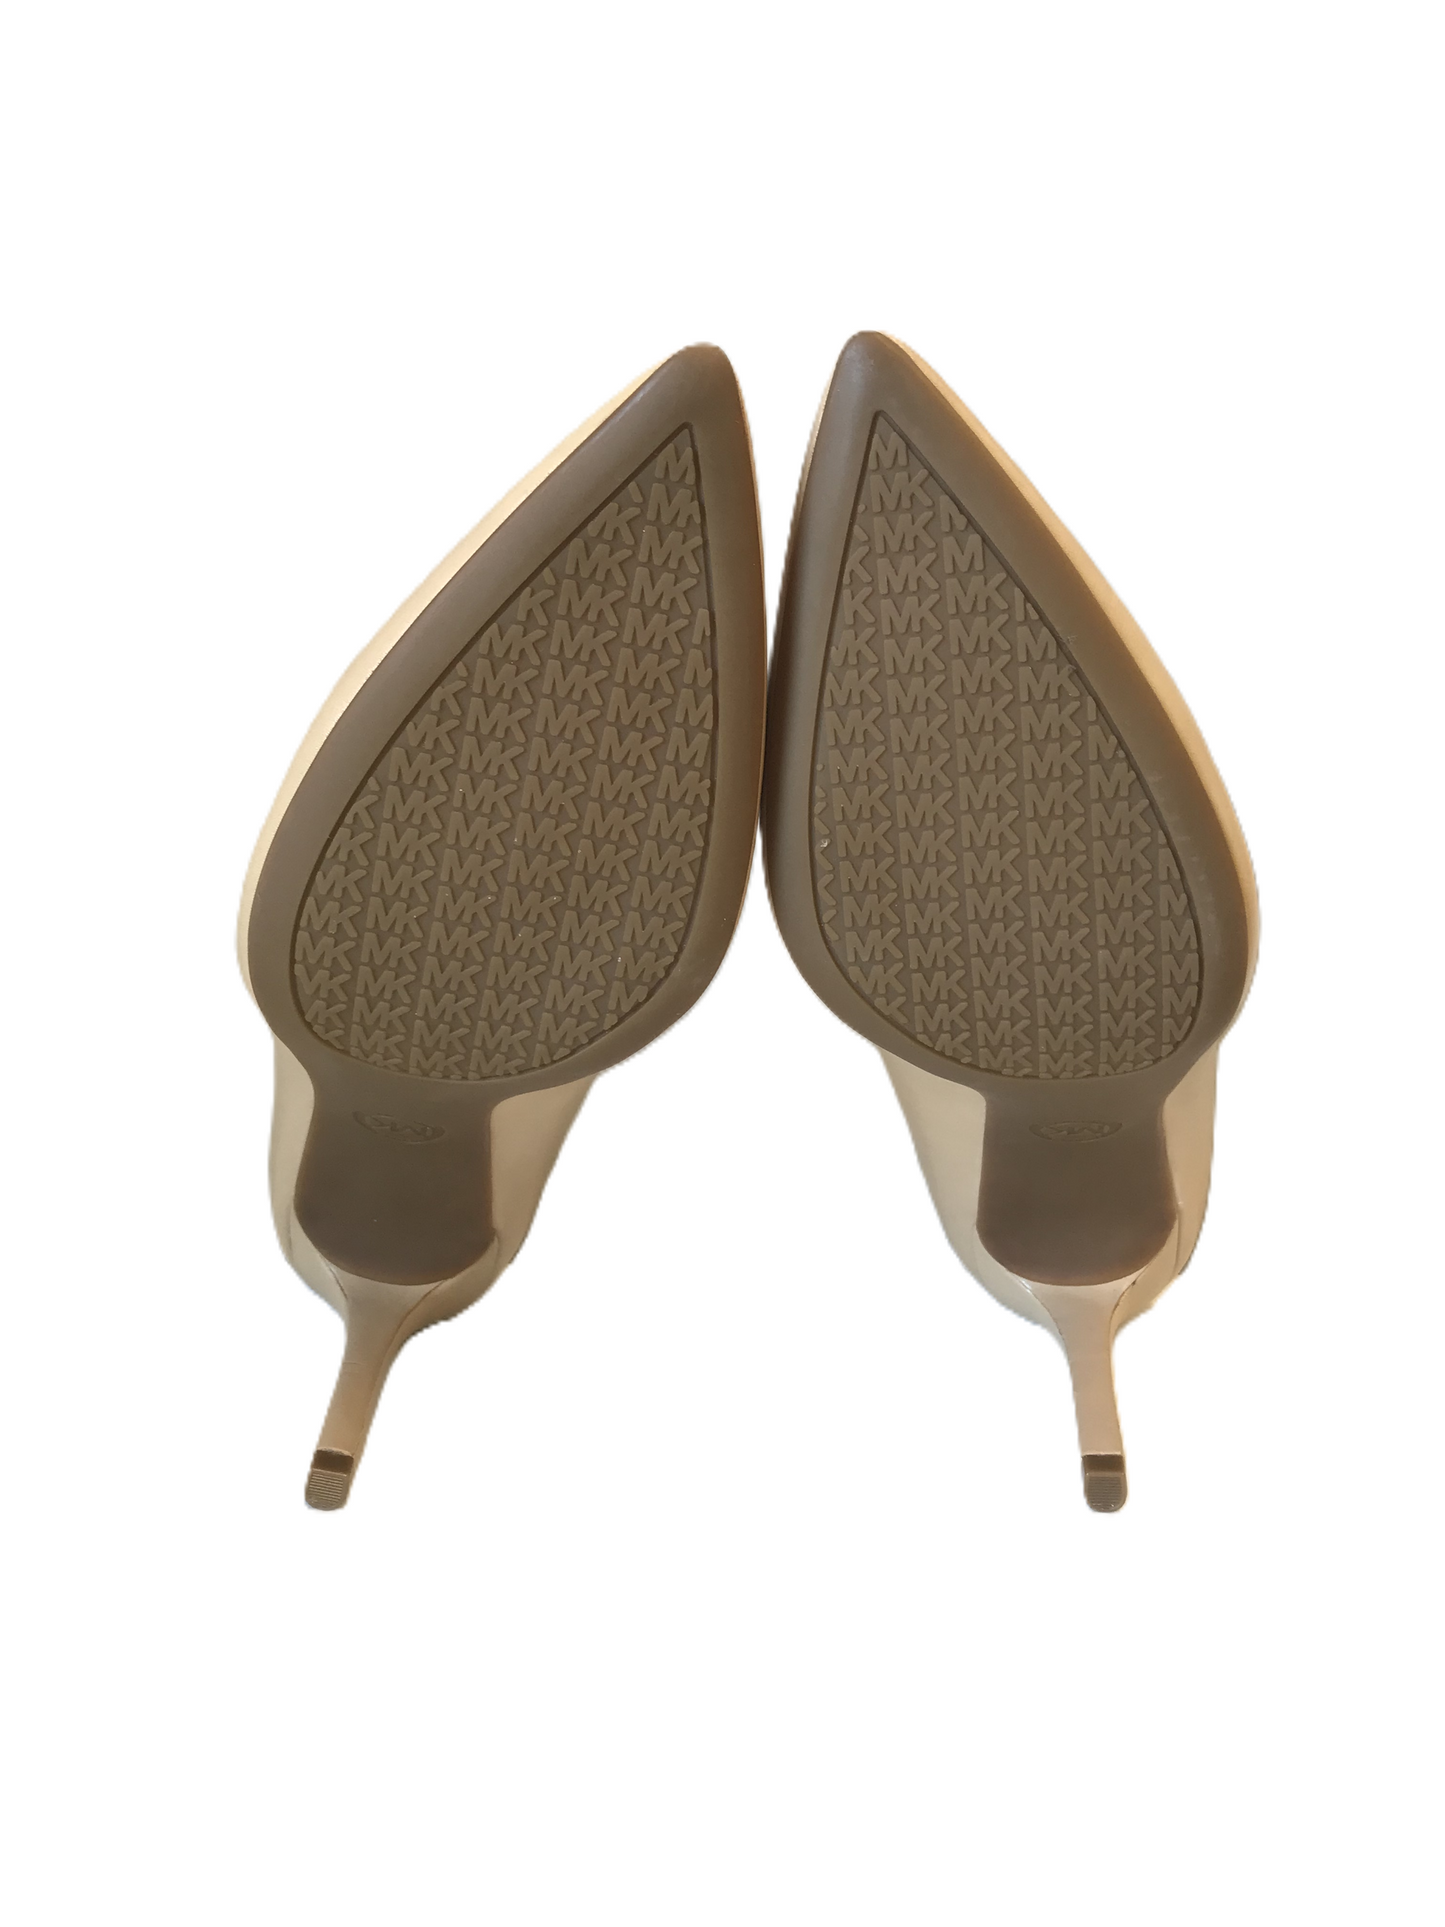 Tan Shoes Designer By Michael By Michael Kors, Size: 9